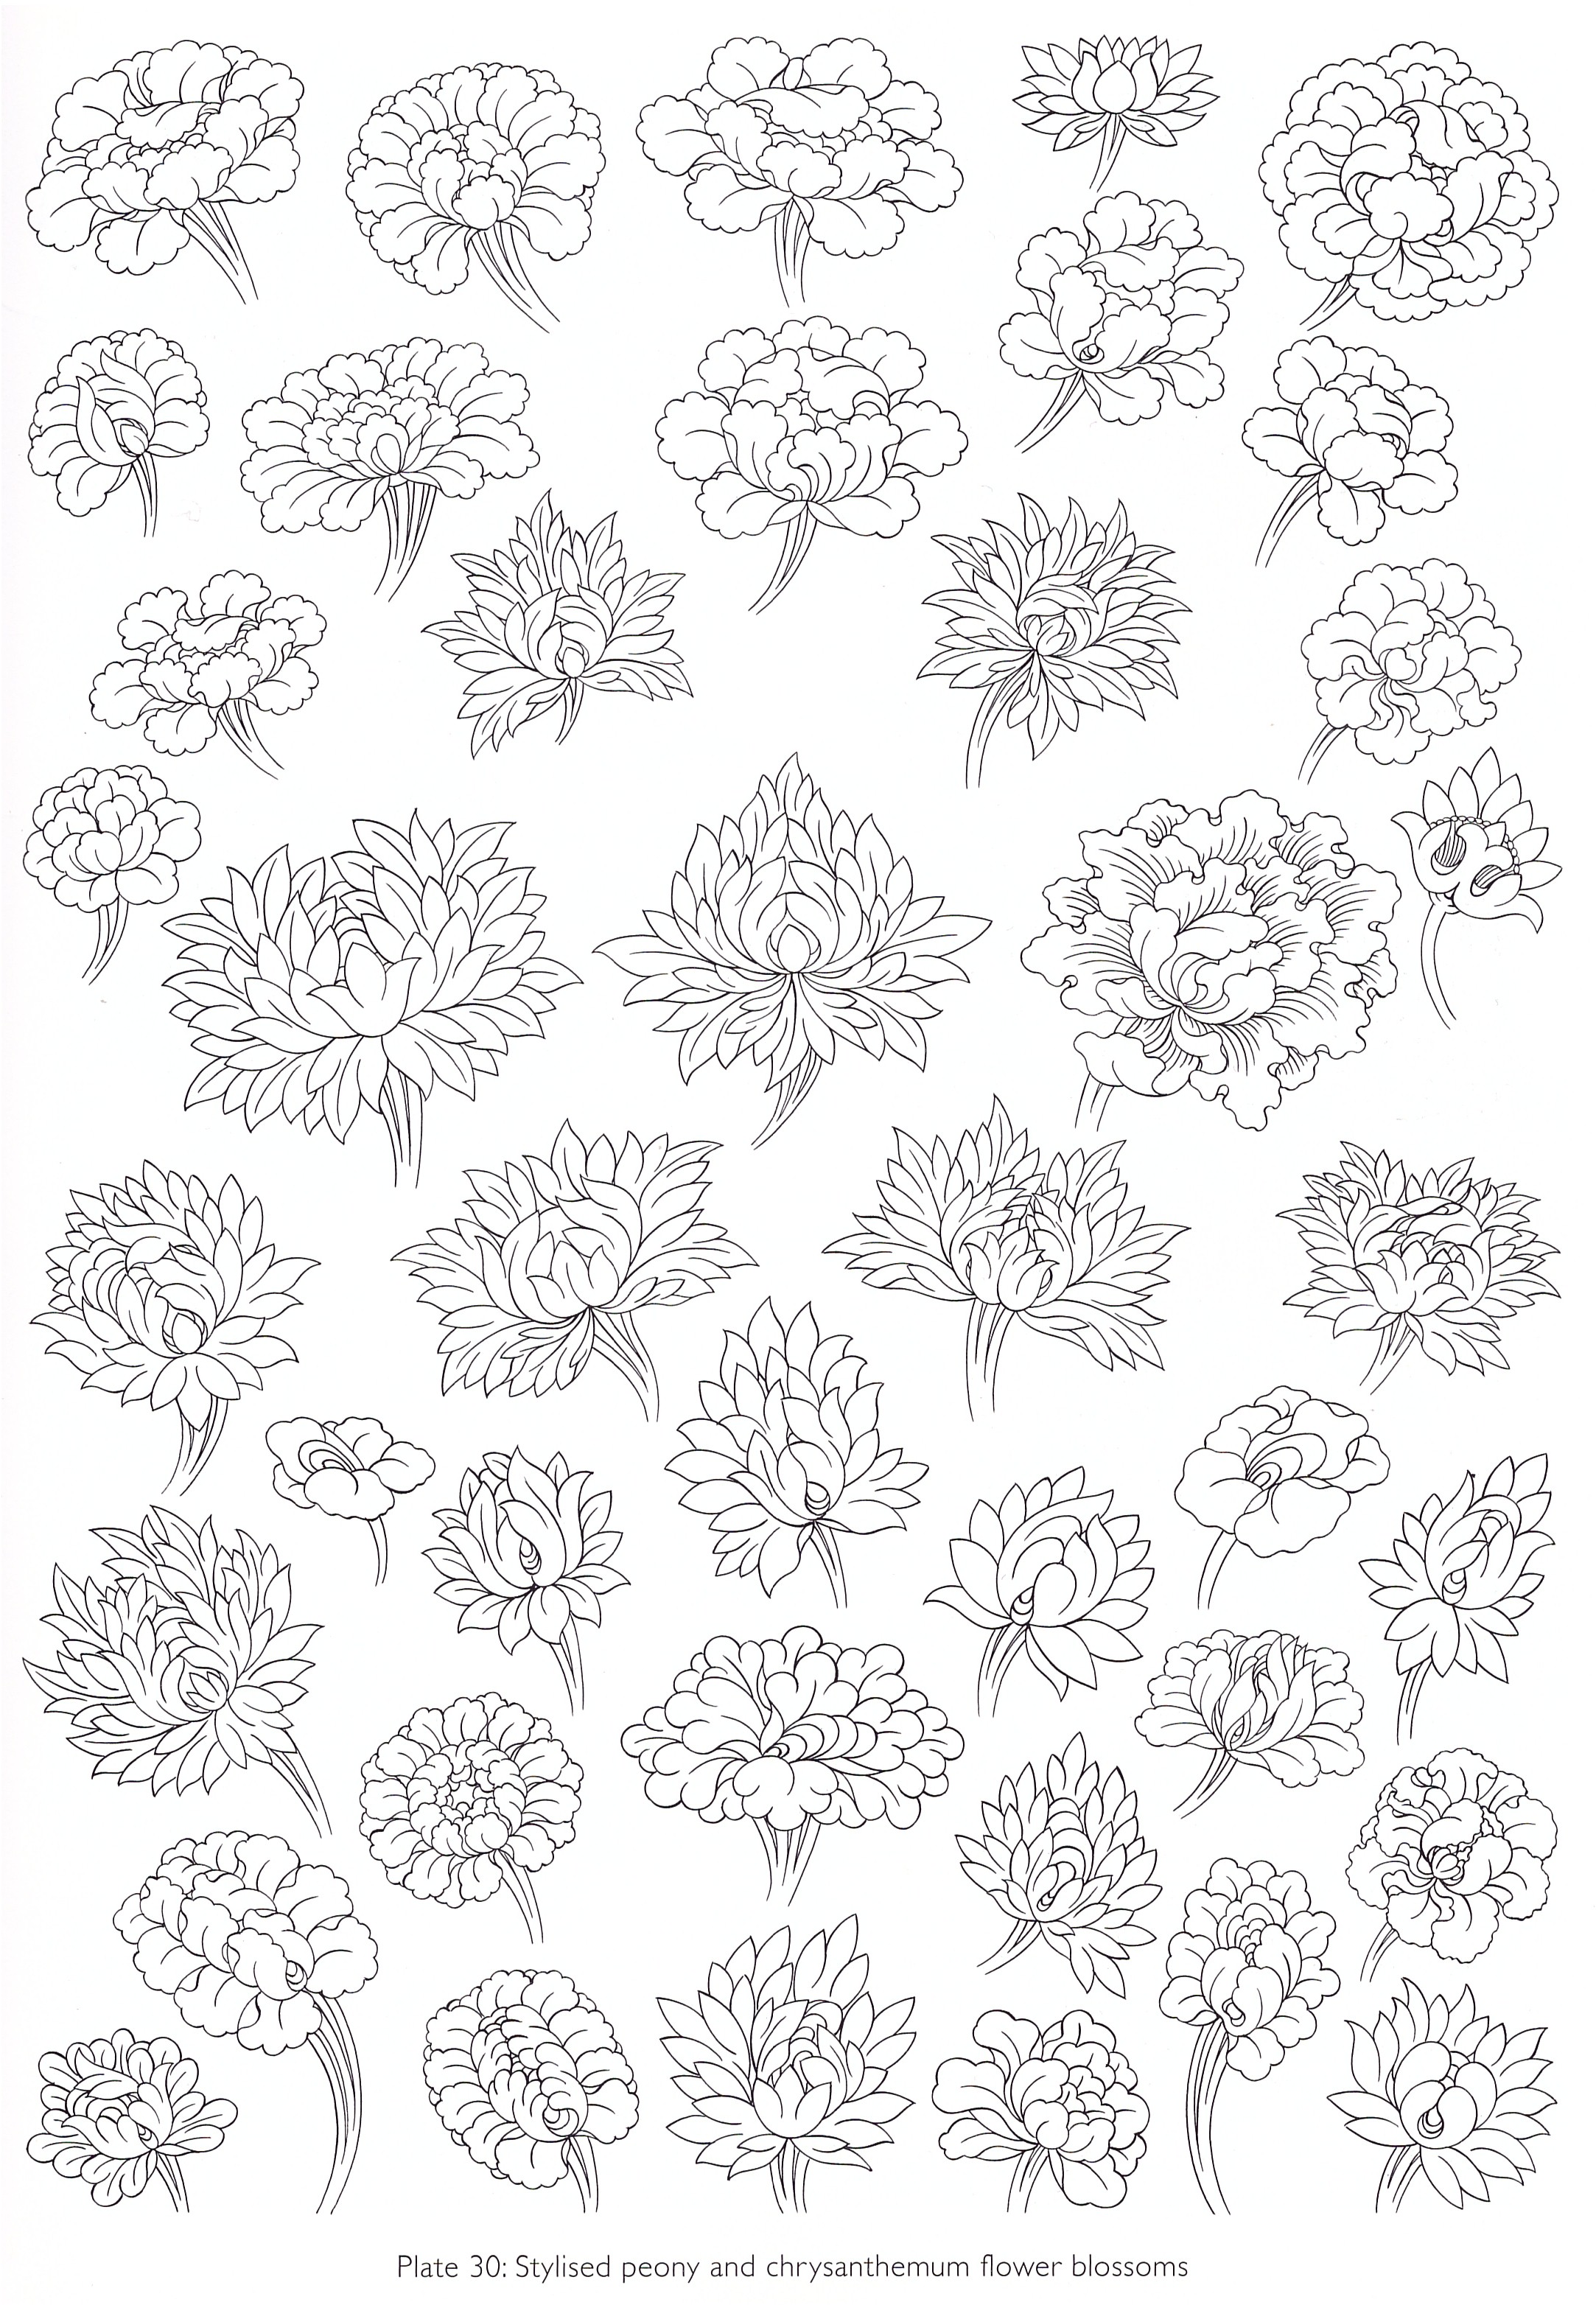 Robert Beer - planche 30 - pivoines et chrysanthèmes.jpeg